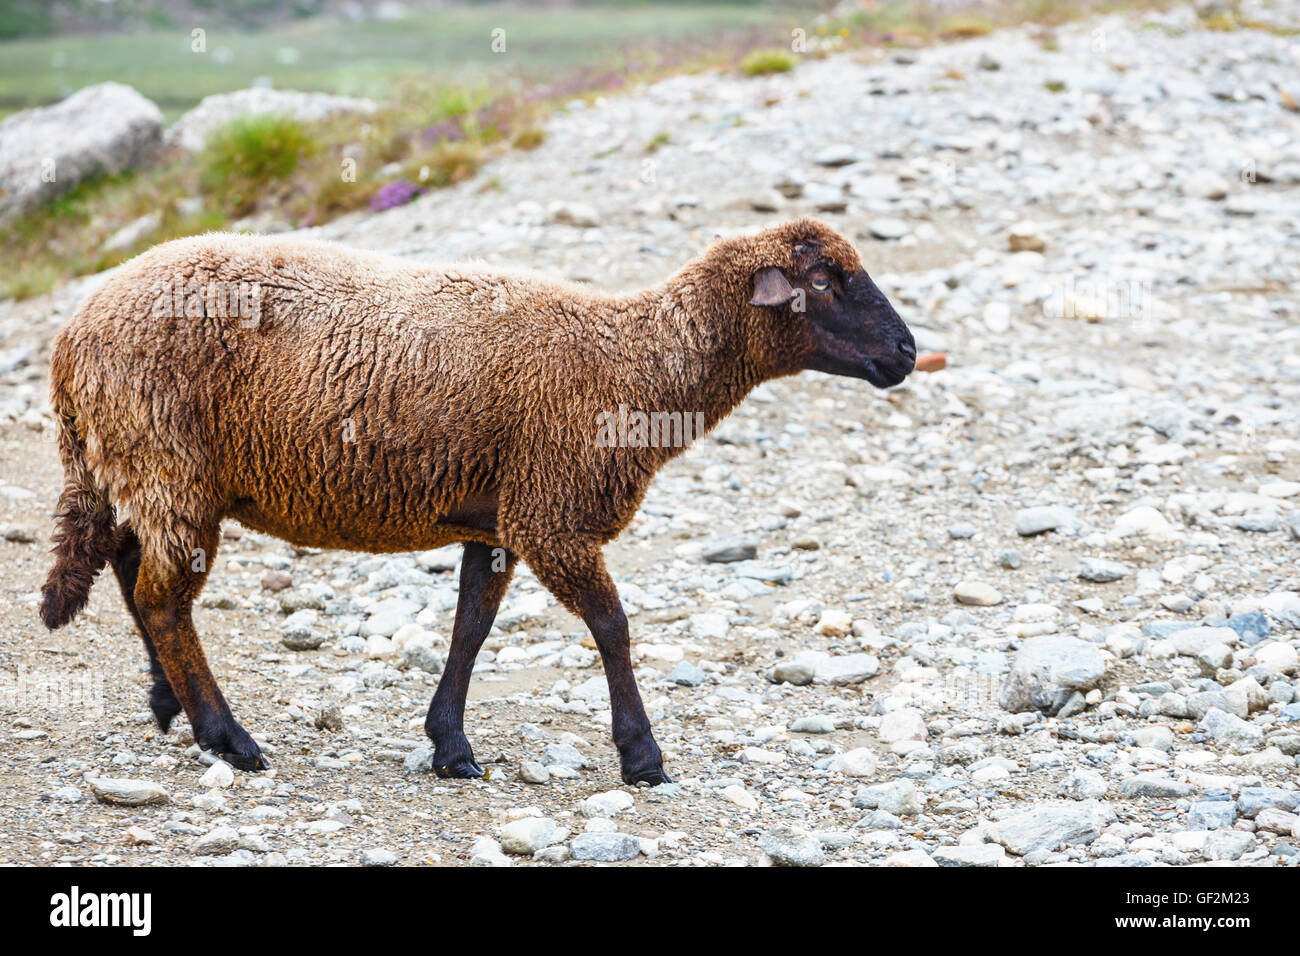 Sheep herds at alpine pastures in Bucegi Mountains, Romania Stock Photo